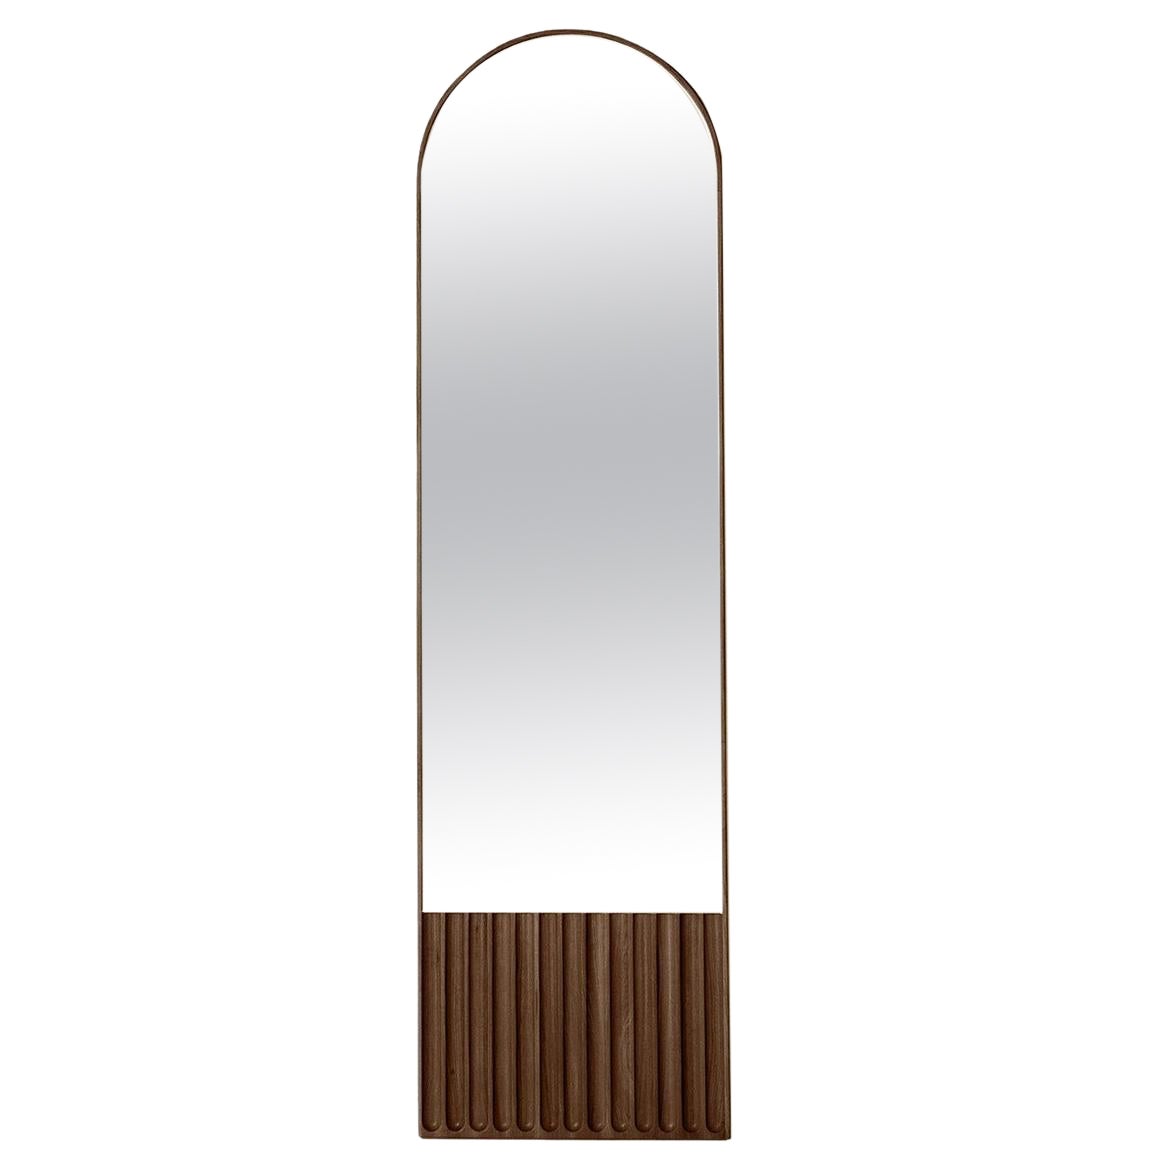 Miroir ovale Tutto Sesto en bois massif, finition frêne marron, contemporain